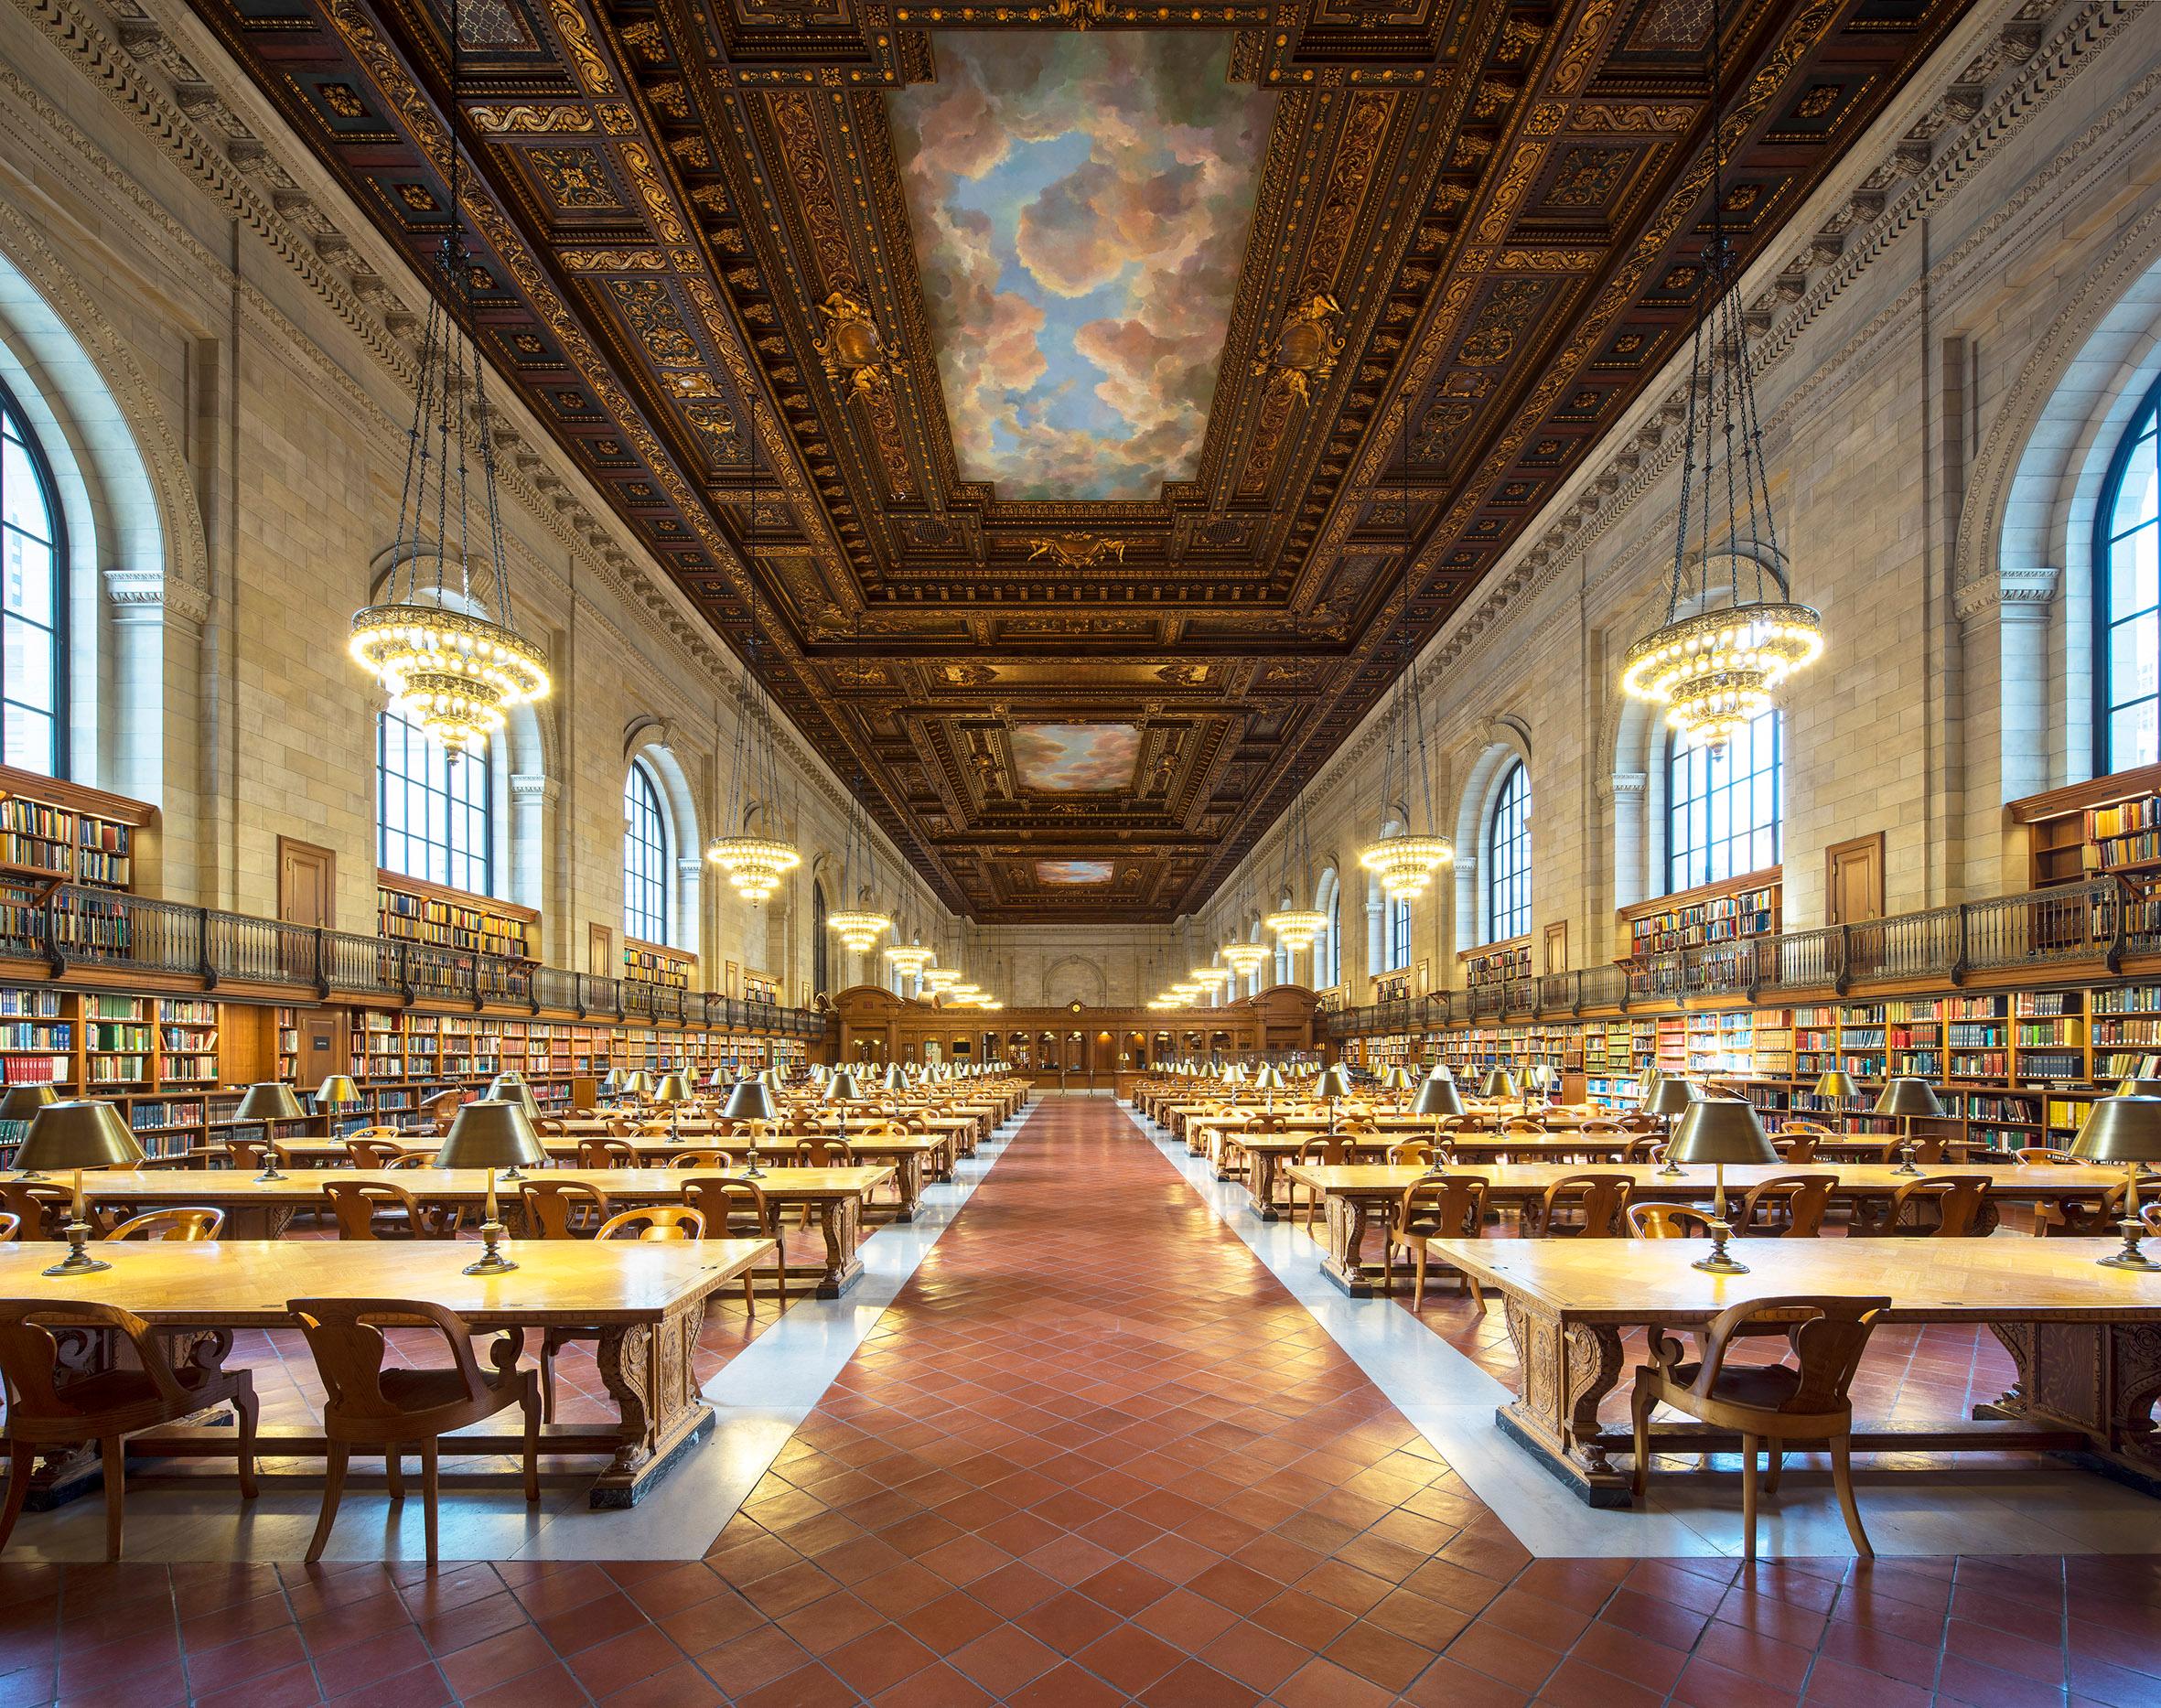 "Rose main reading room, New York Public Library" photography by Reinhard Görner